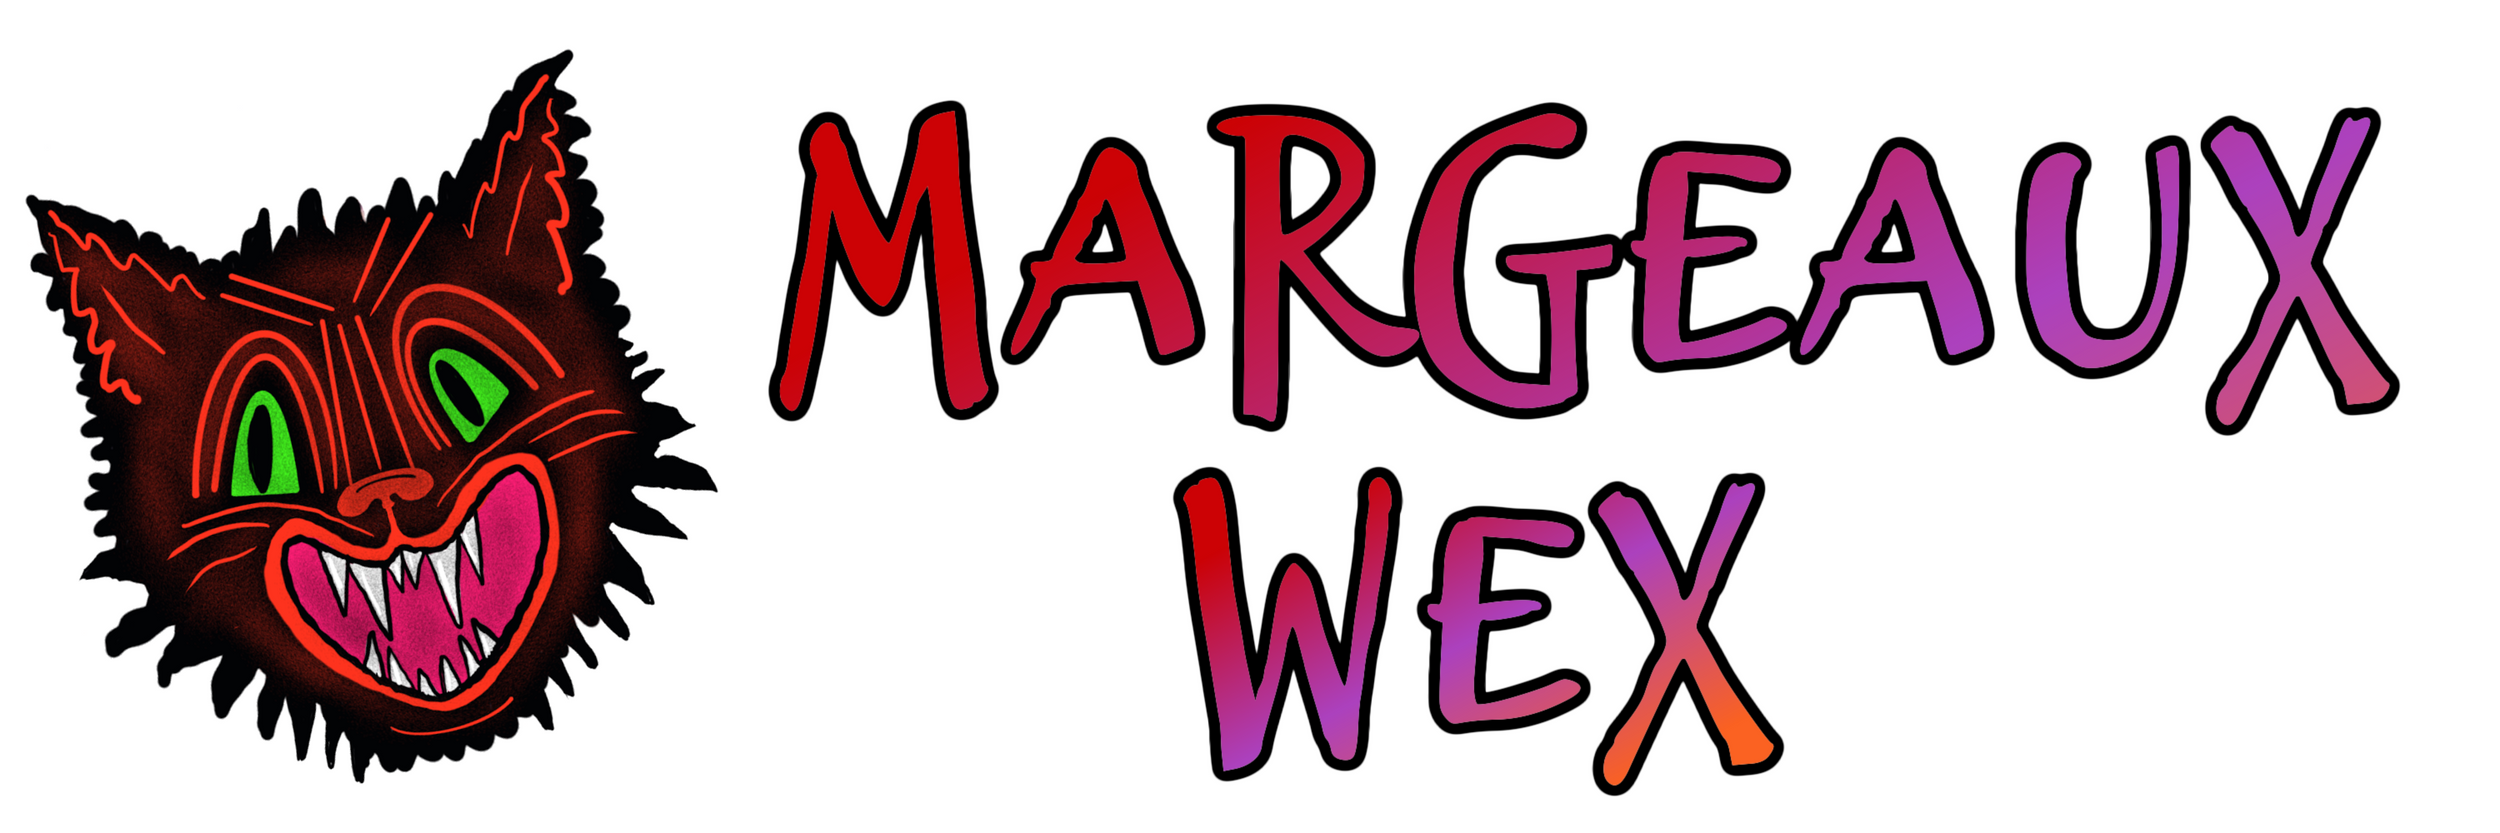 Margeaux Wex Designs